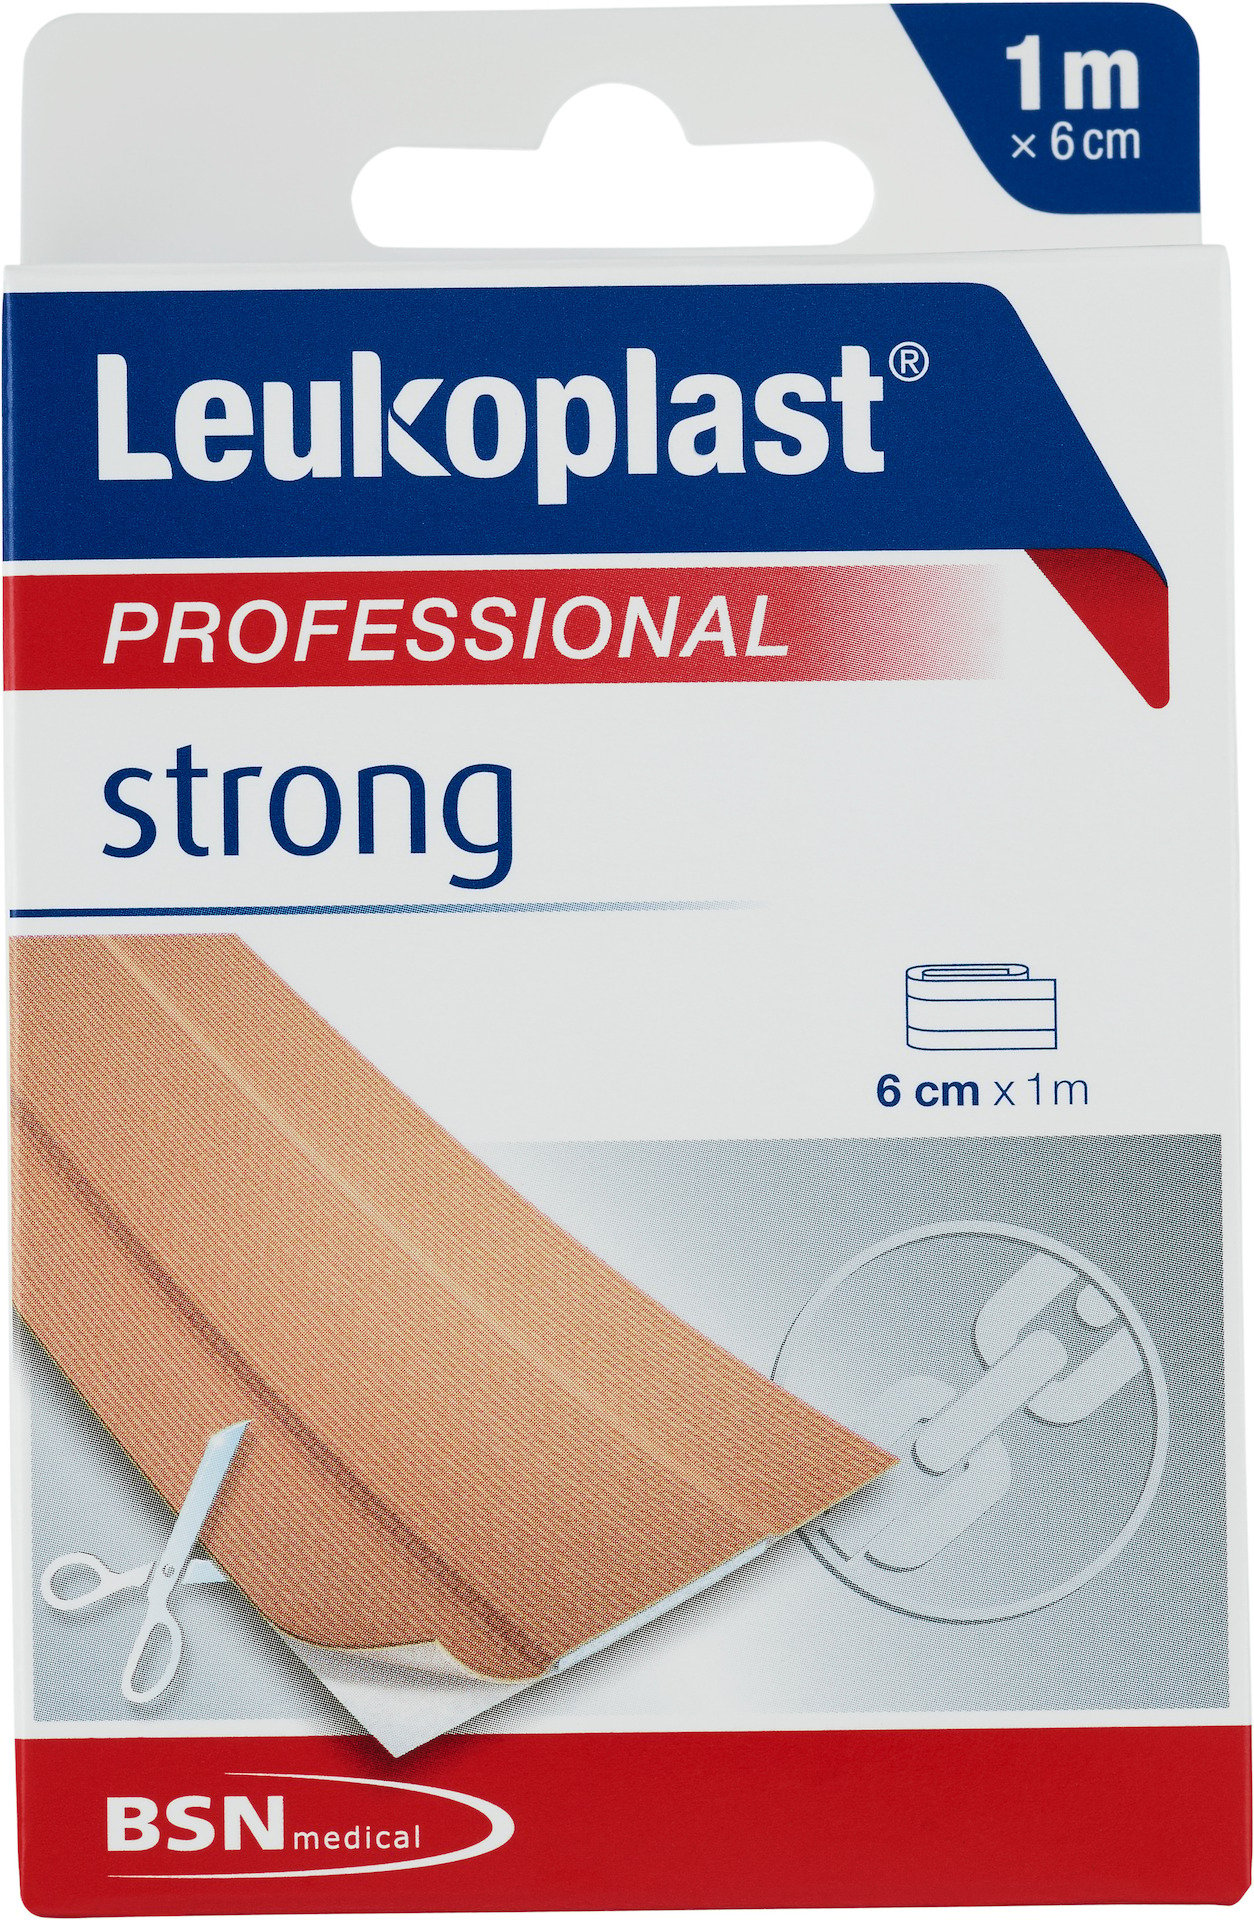 Leukoplast Professinal Strong 6 cm x 1 m